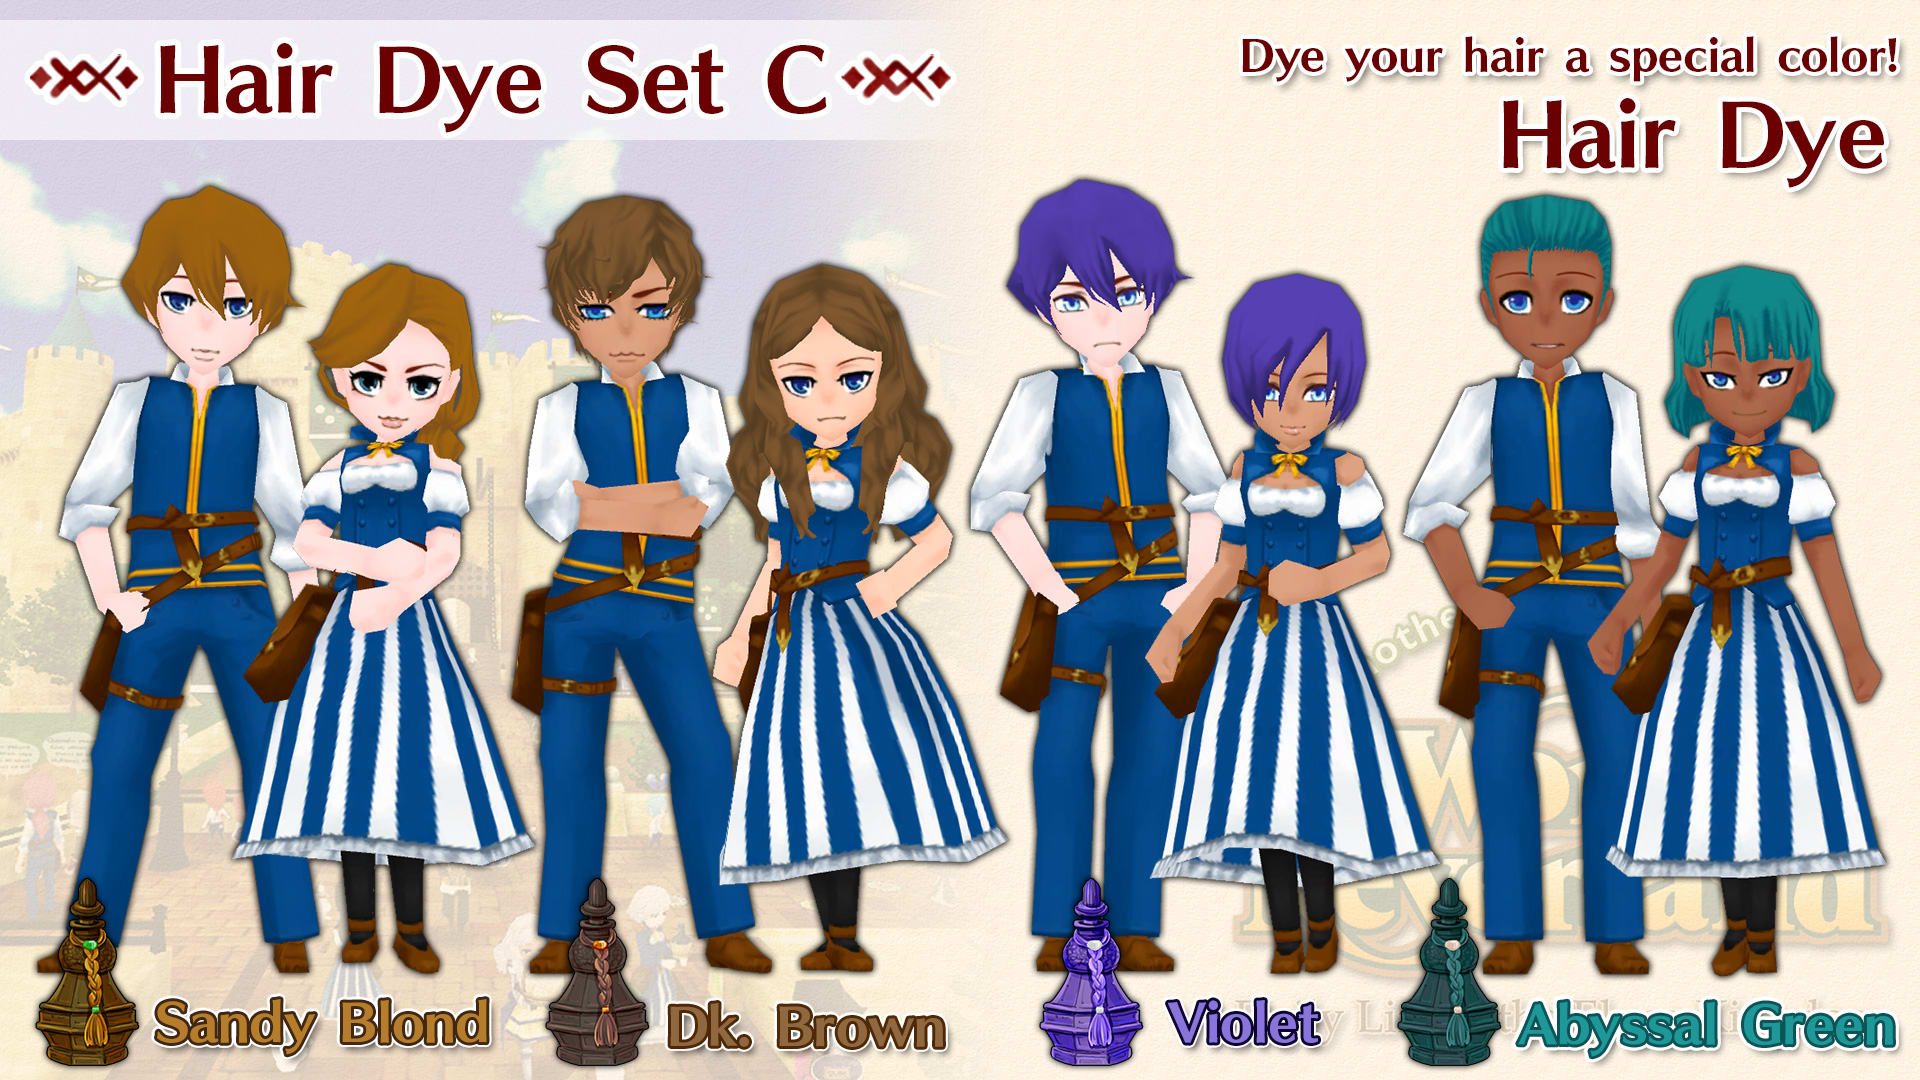 Hair Dye Set C (Sandy Blond, Dk. Brown, Violet, Abyssal Green)